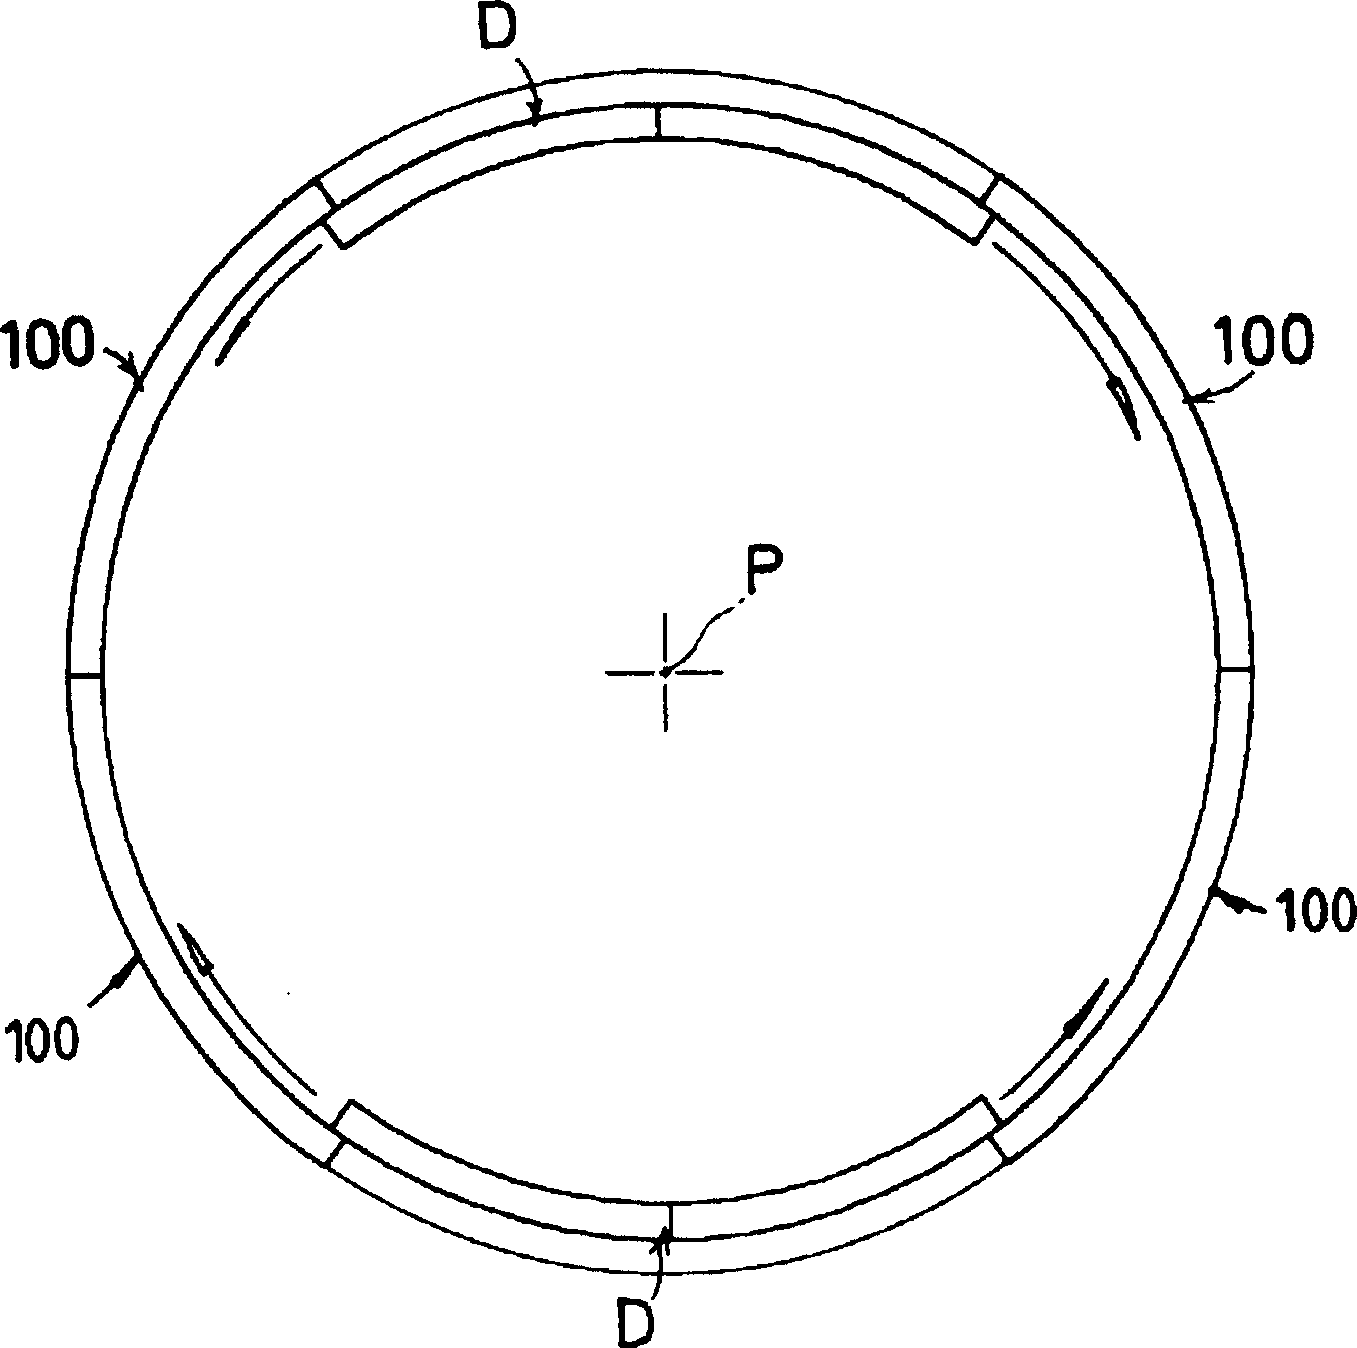 Modular automatic arc door with concentric circle